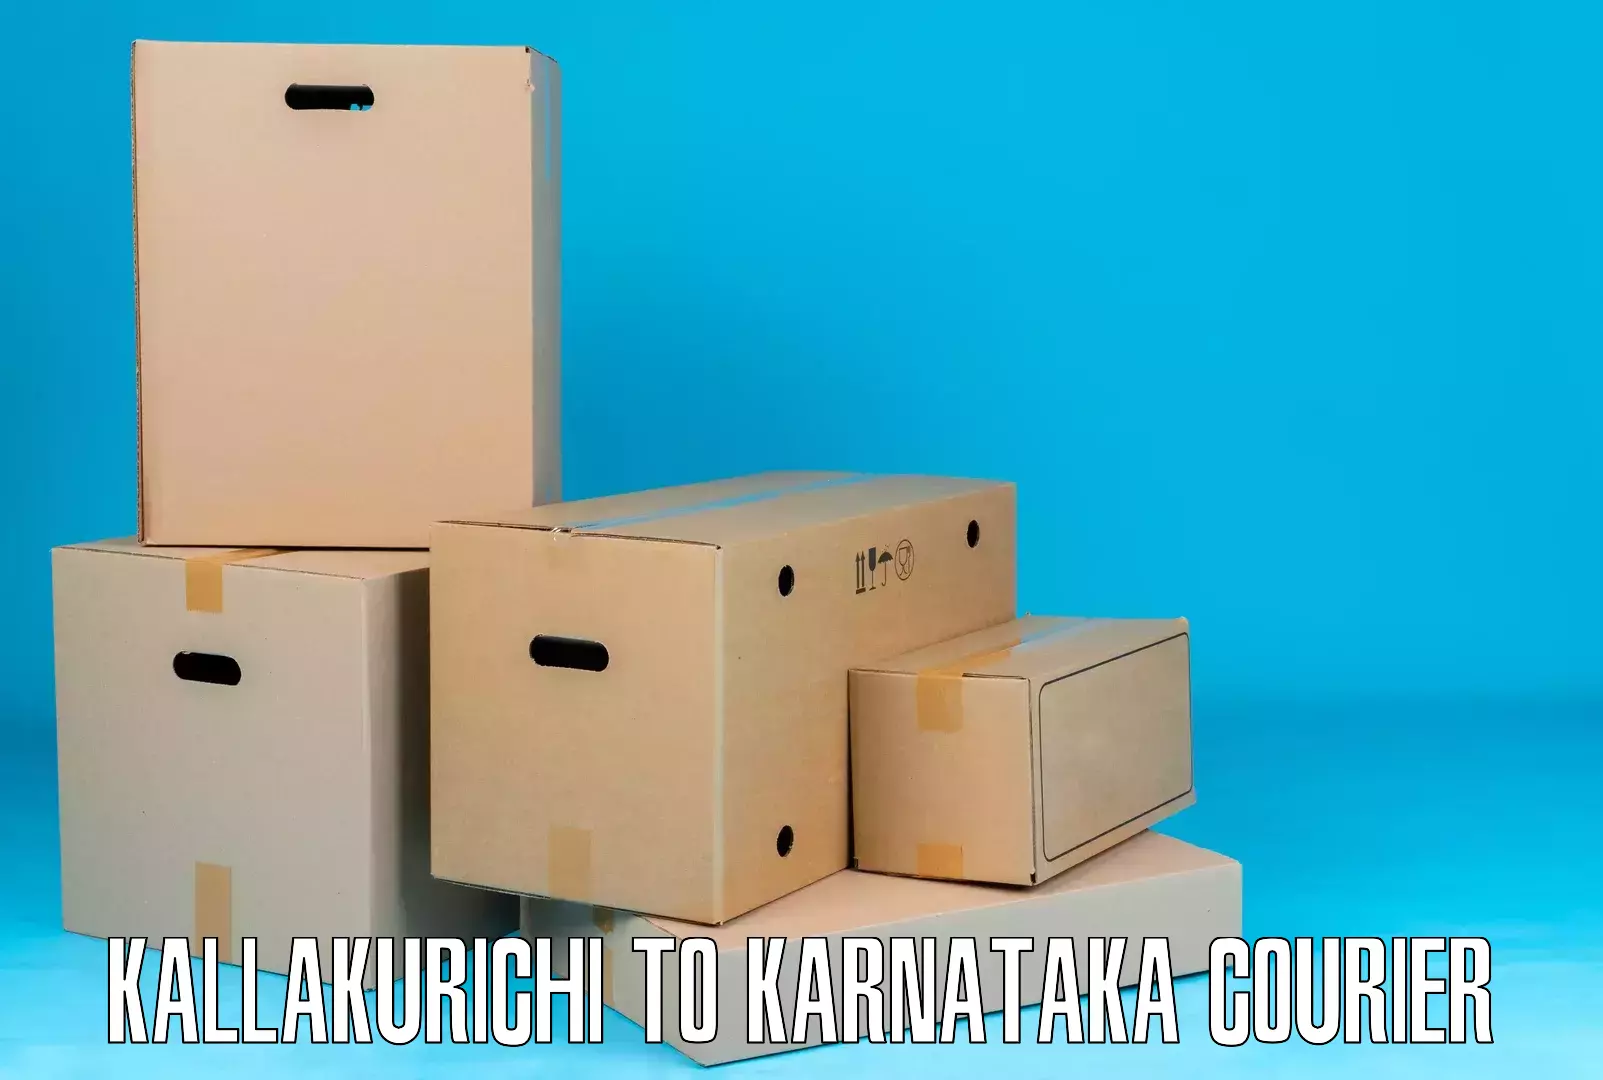 Subscription-based courier Kallakurichi to Kolhar